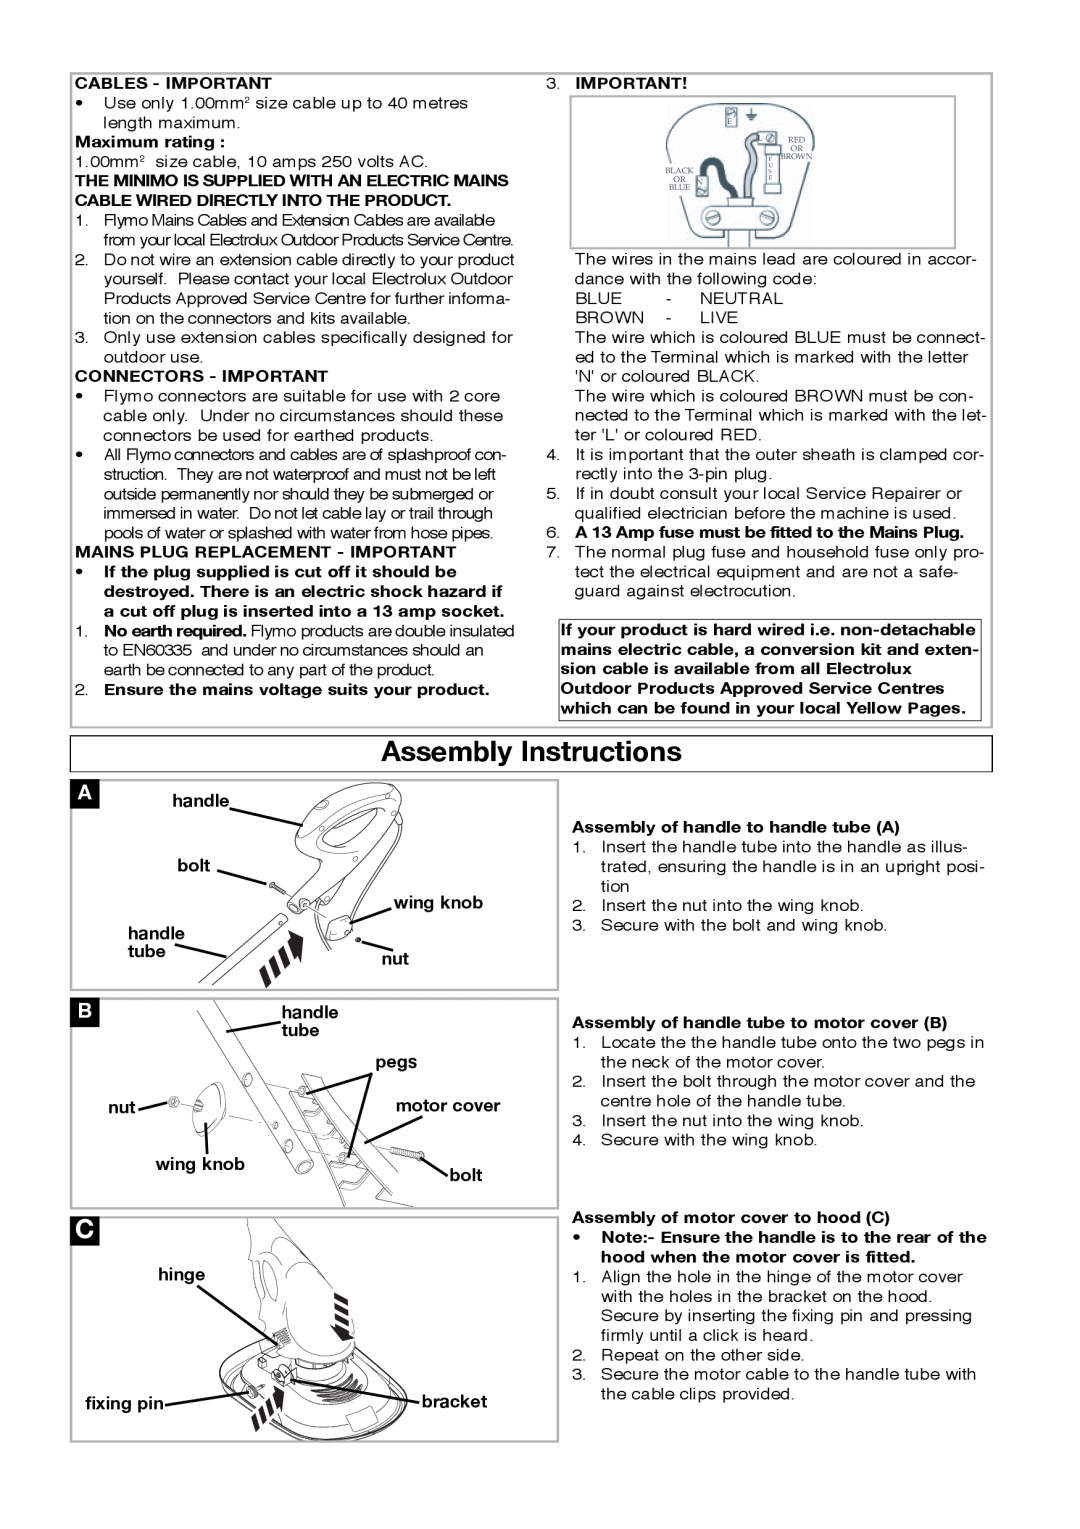 Flymo Minimo manual Assembly Instructions, A handle bolt wing knob, tube, hinge, fixing pin, bracket 